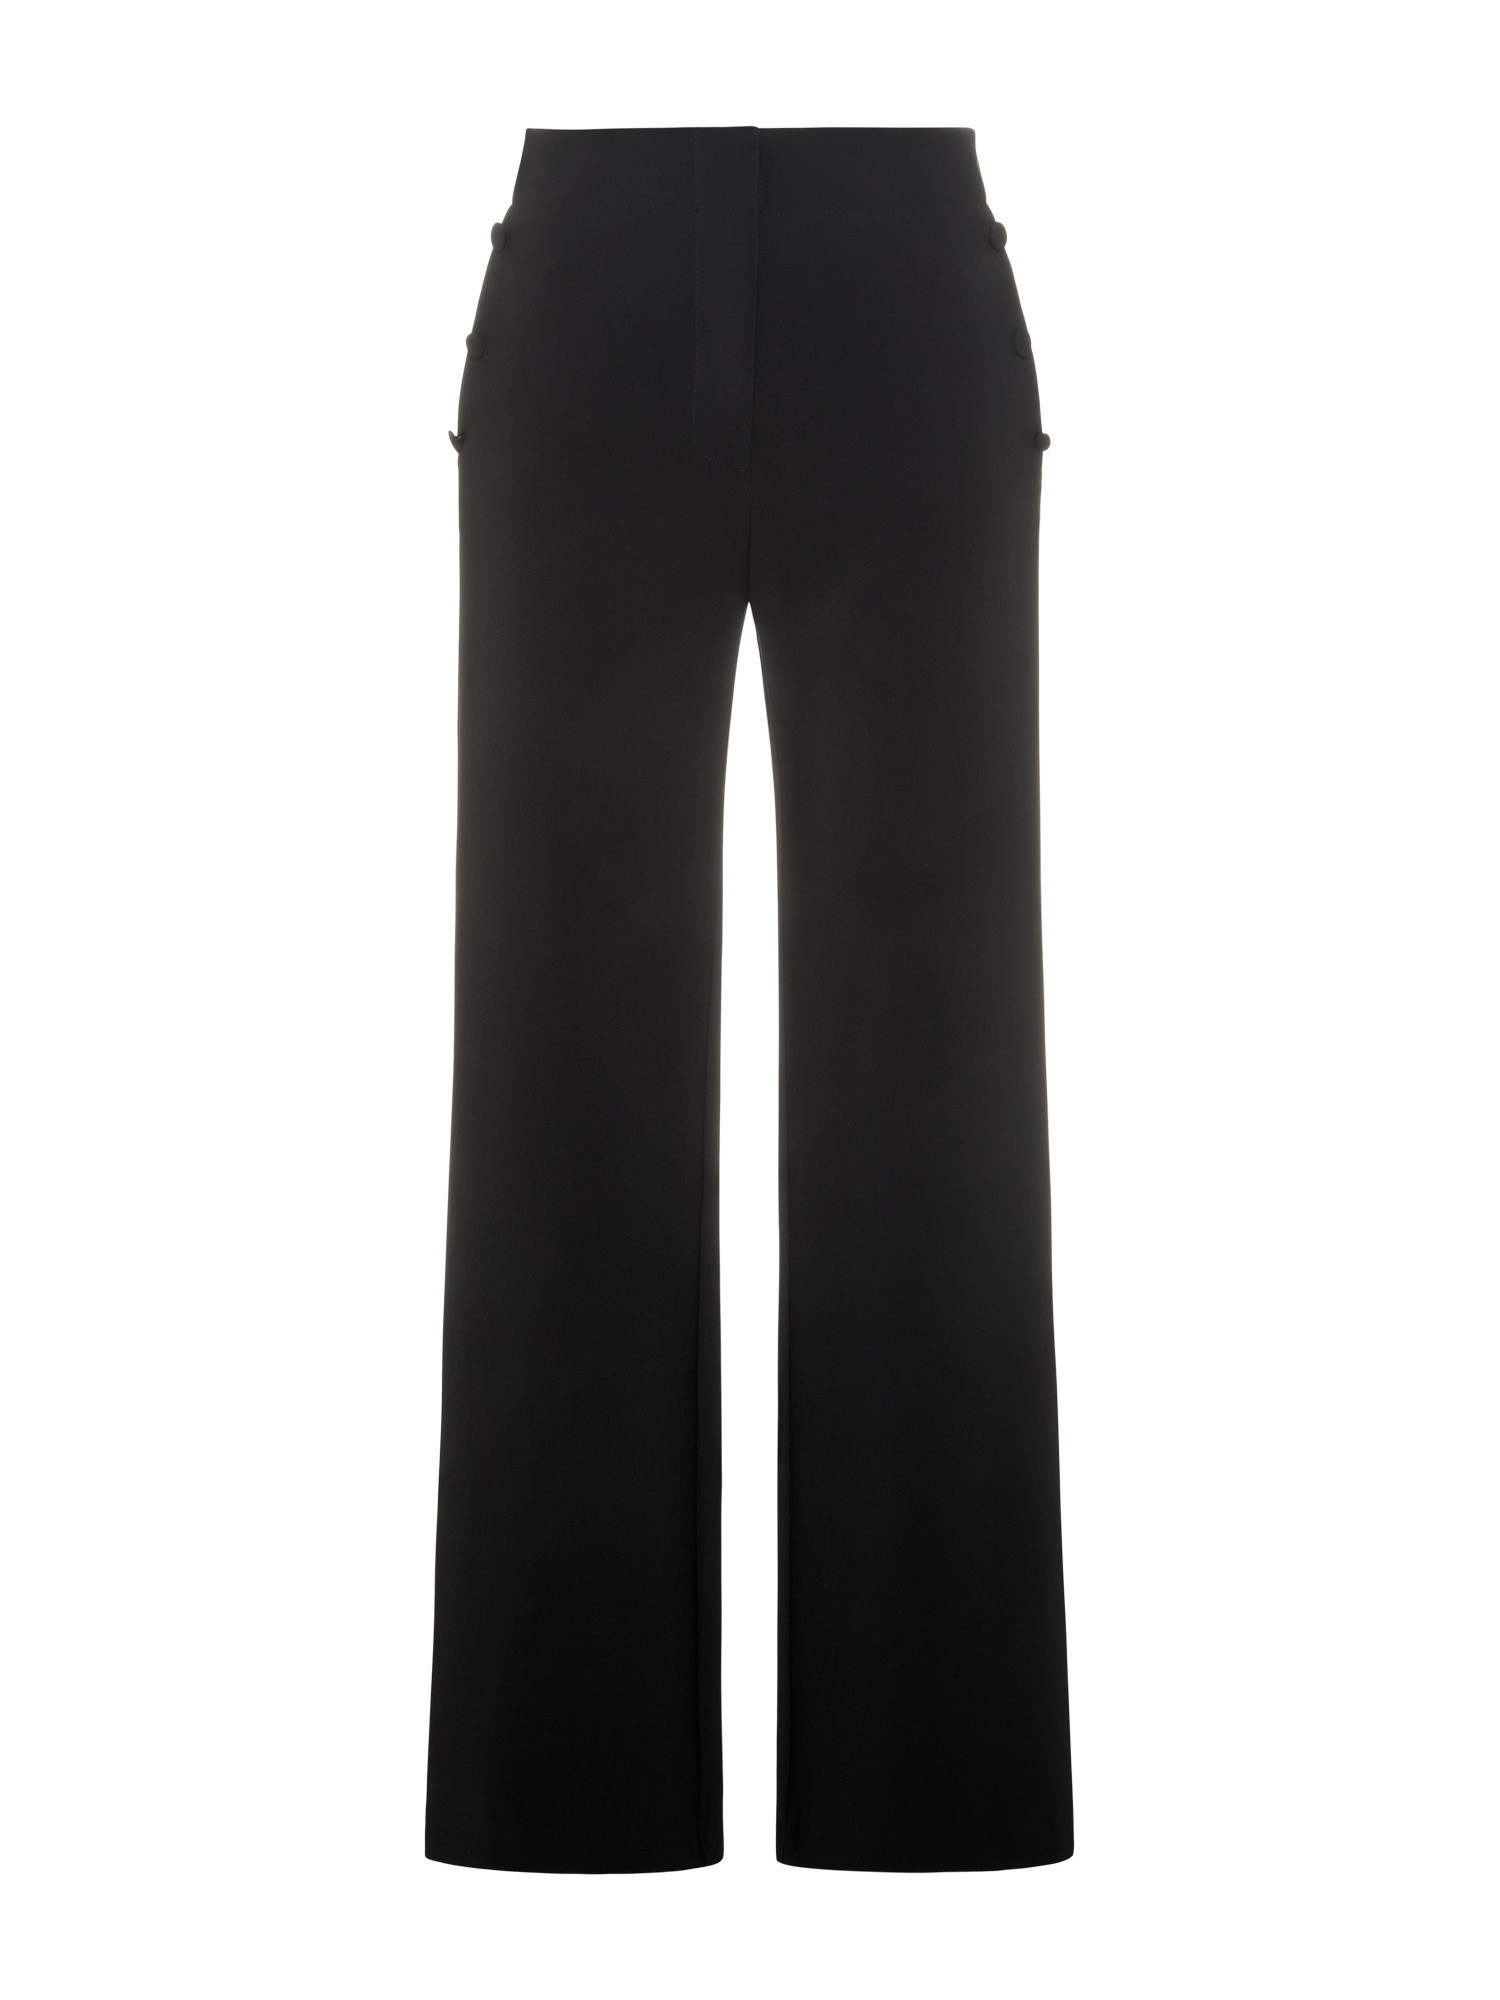 Koan - Wide leg trousers, Black, large image number 0